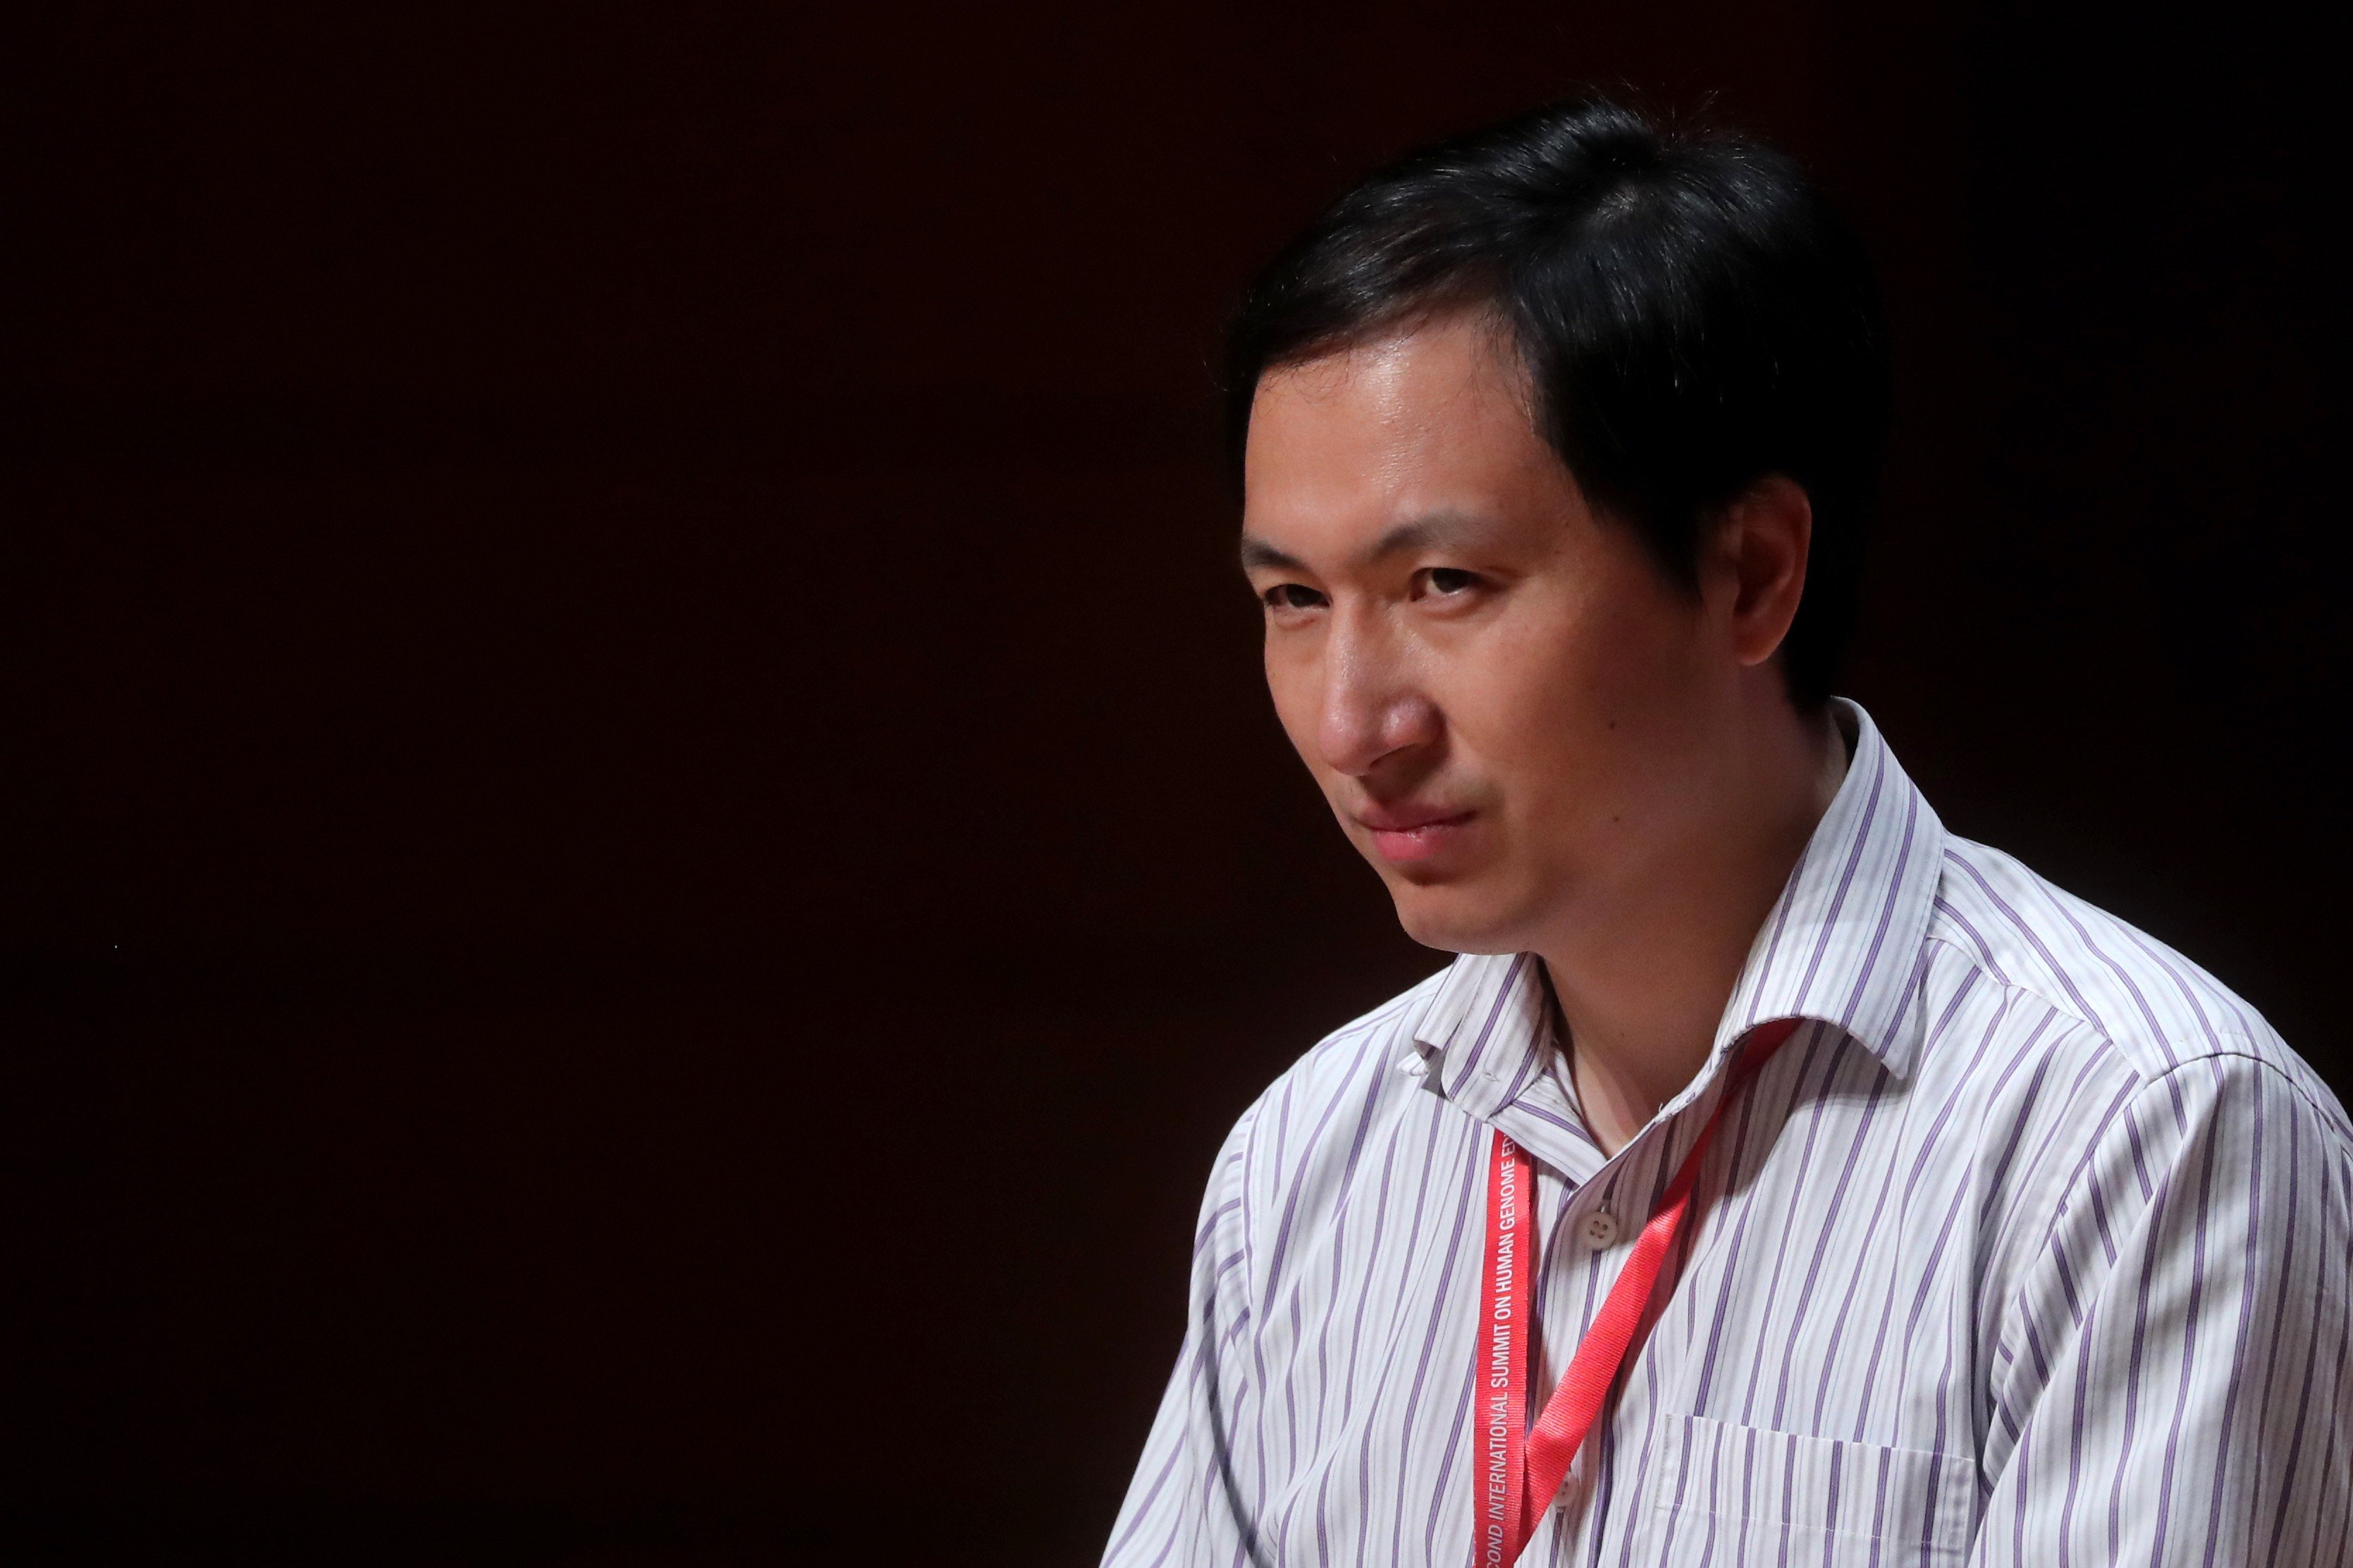 Chinese scientist He Jiankui speaks at a summit on human genome editing at the University of Hong Kong in November. Photo: Sam Tsang